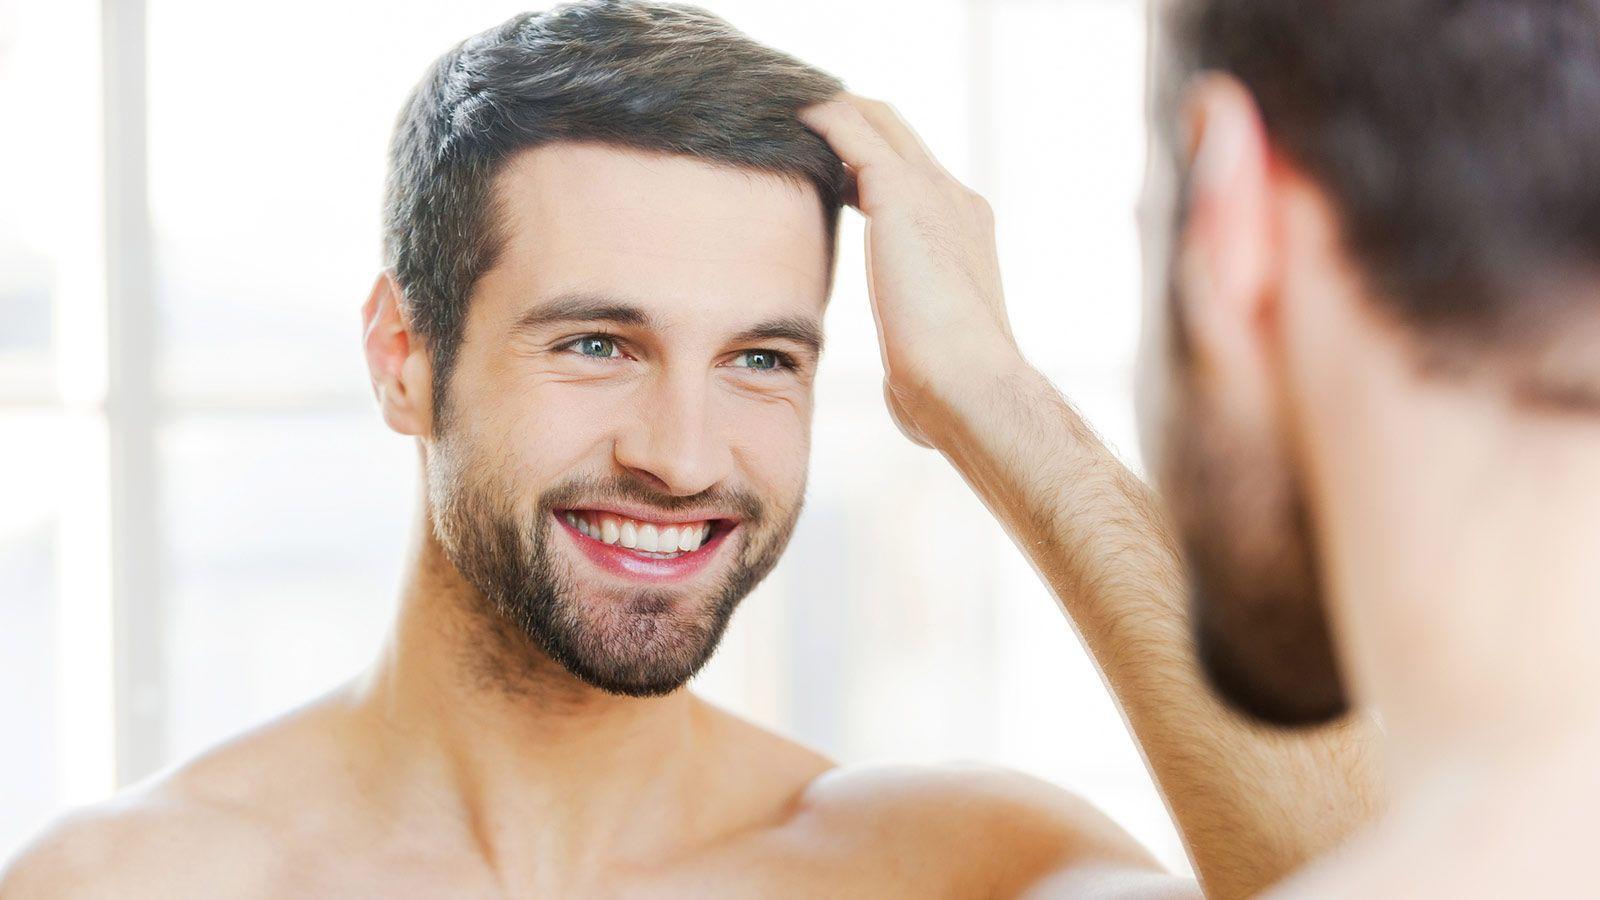 Natural remedies to thicken facial hair